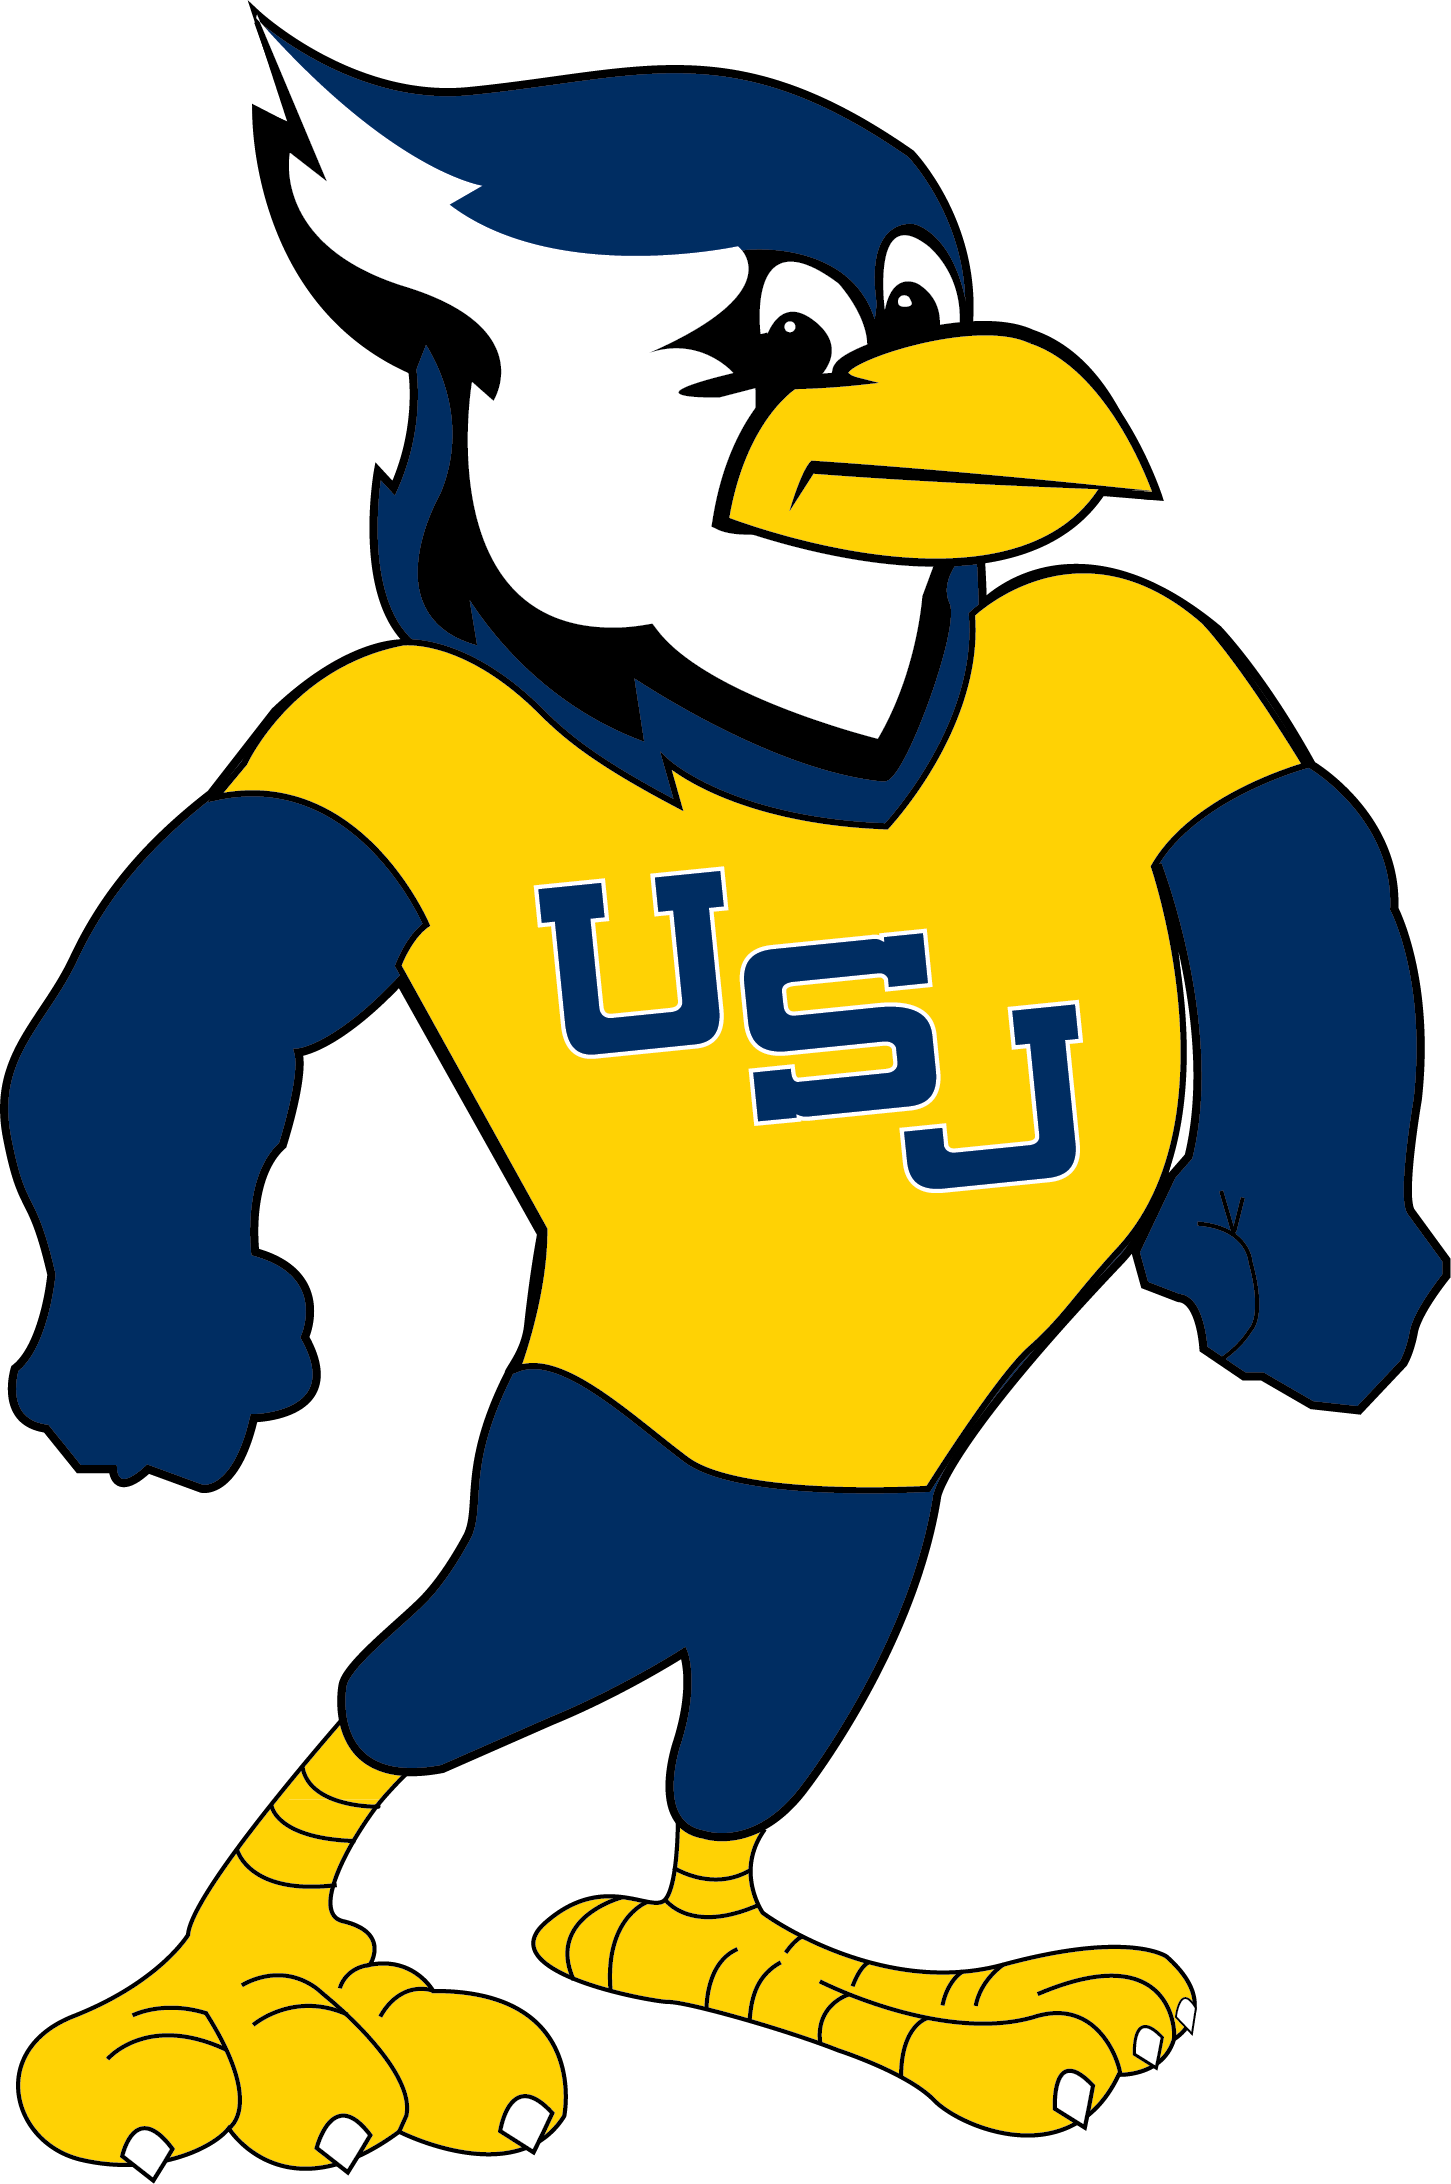 University Of Saint Joseph Blue Jays - University Of Saint Joseph Blue Jay (1451x2184)